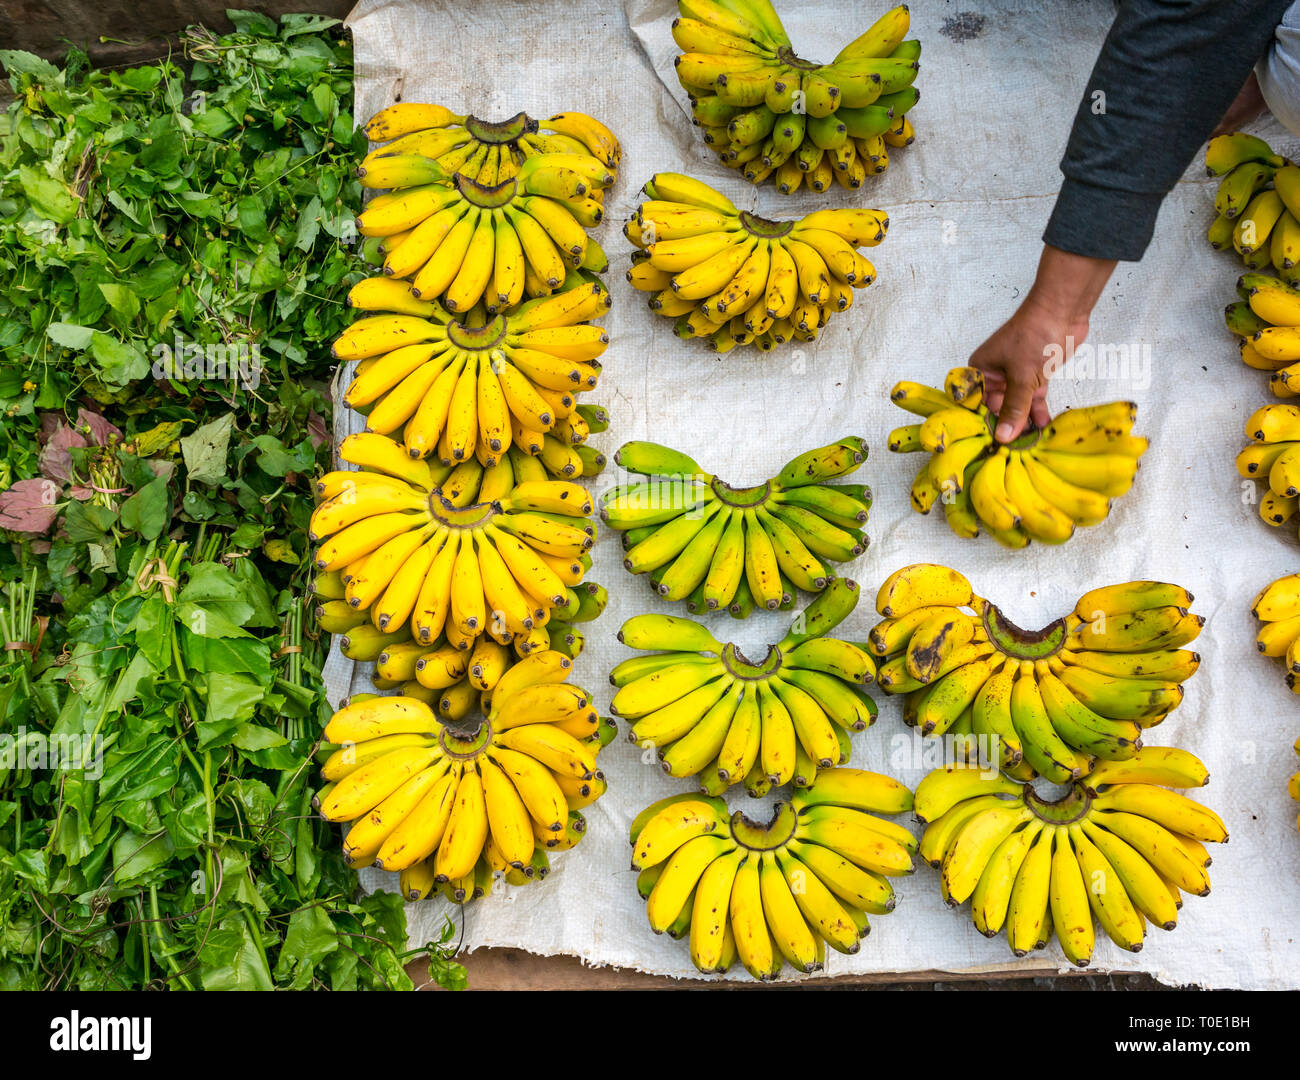 Bananas for sale at morning street food market, Luang Prabang, Laos, SE Asia Stock Photo